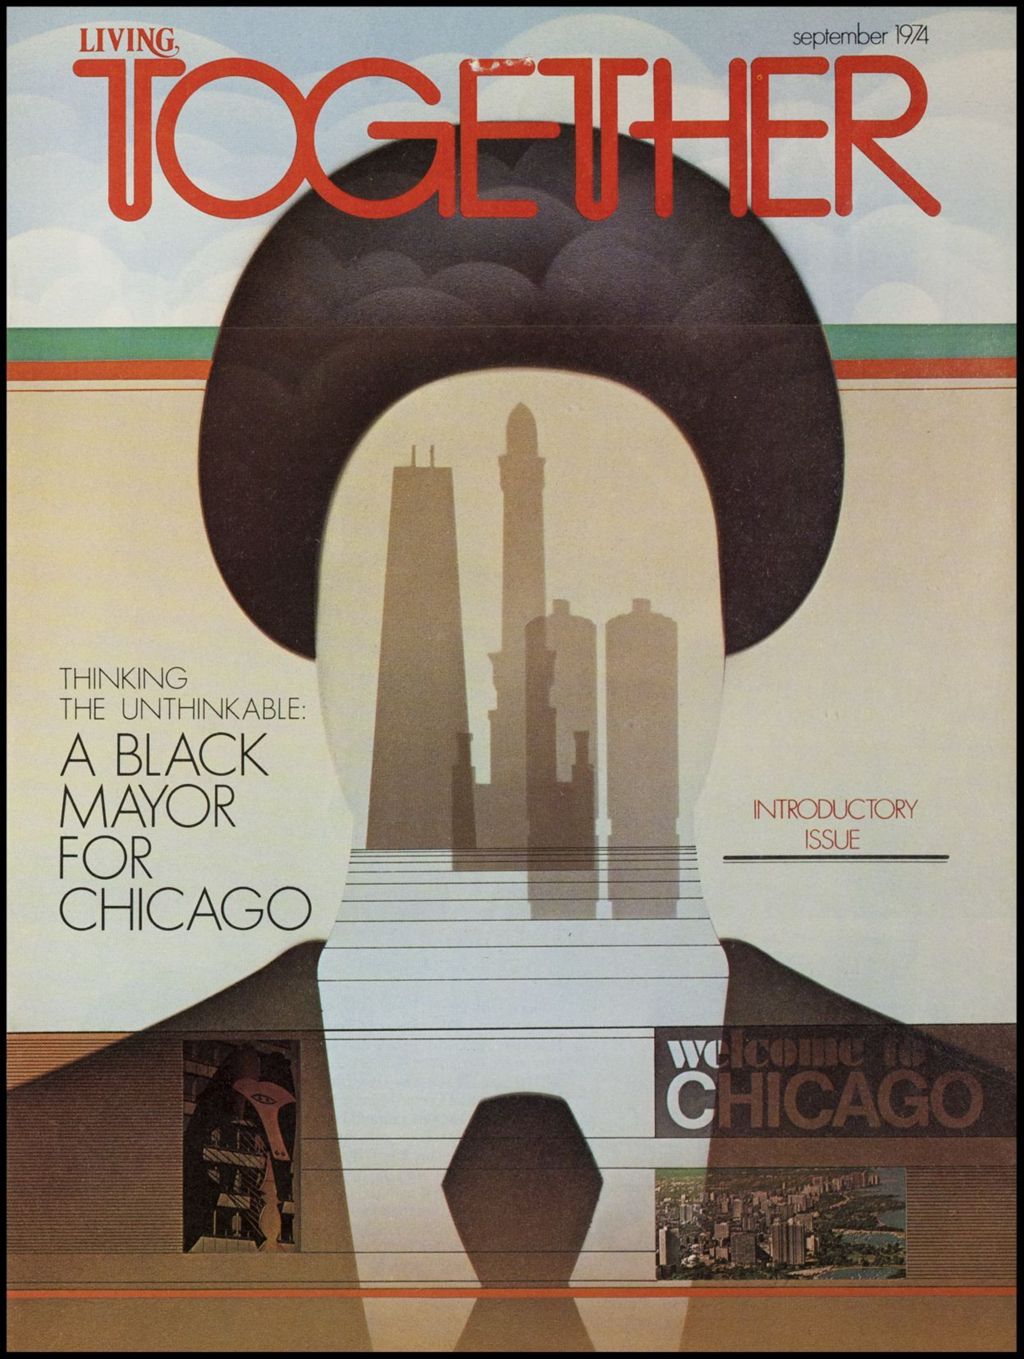 Black Mayor for Chicago, 1974 (Folder IV-781)